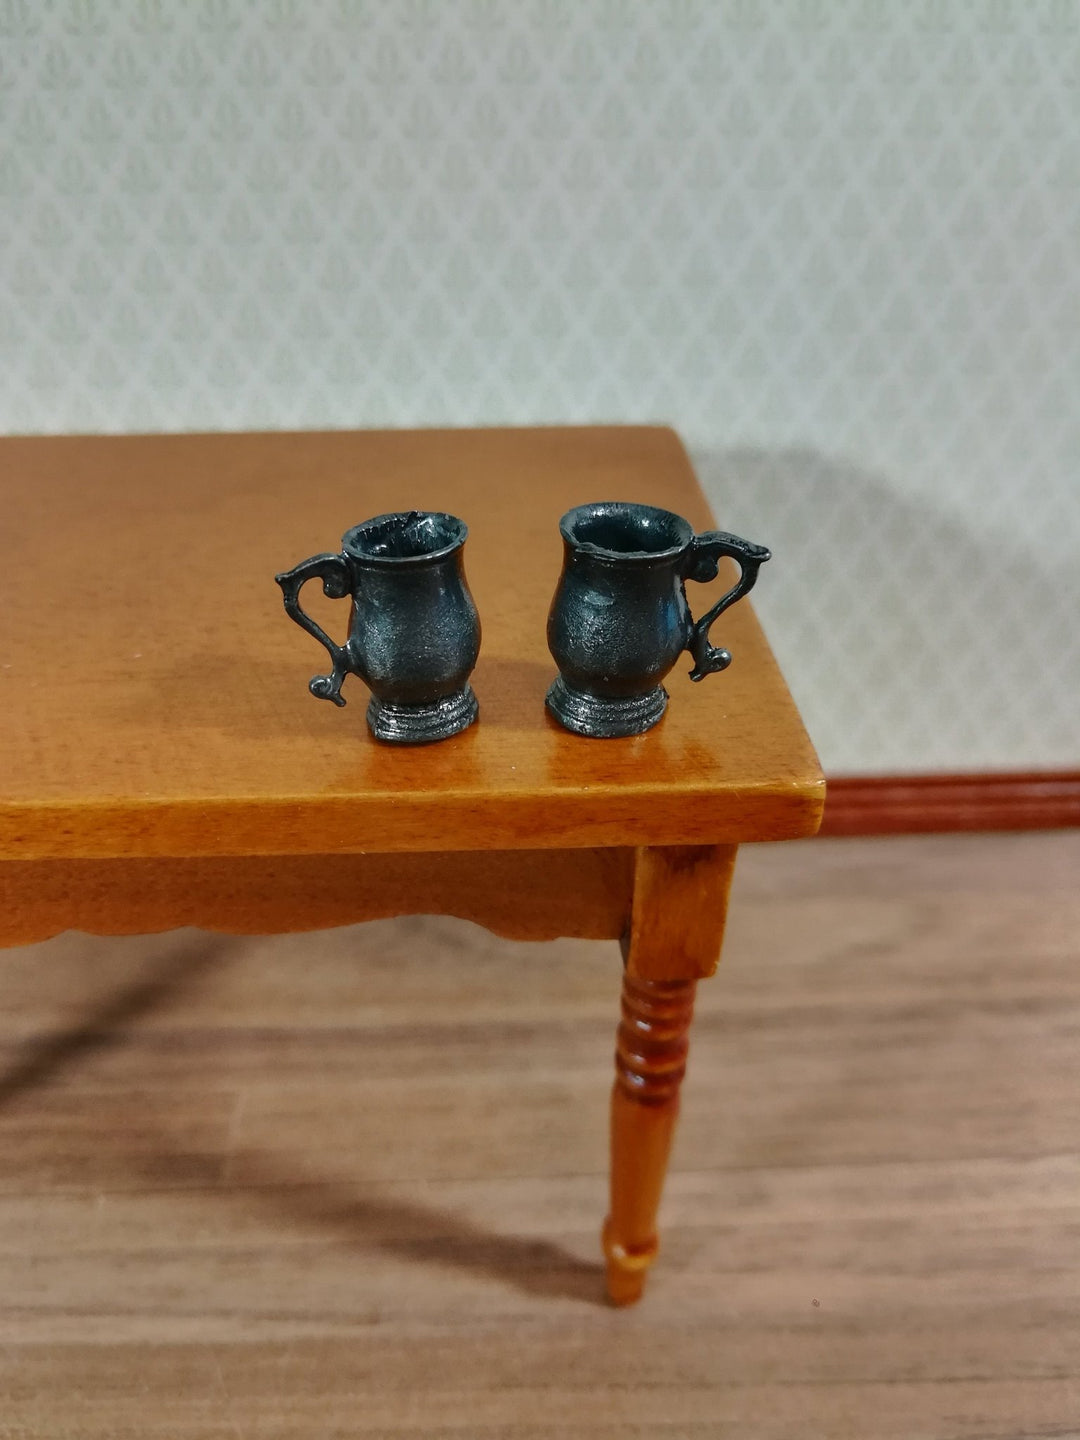 Dollhouse Miniature Fancy Metal Tankard Mugs 1:12 Scale Set of 2 Vintage Style - Miniature Crush